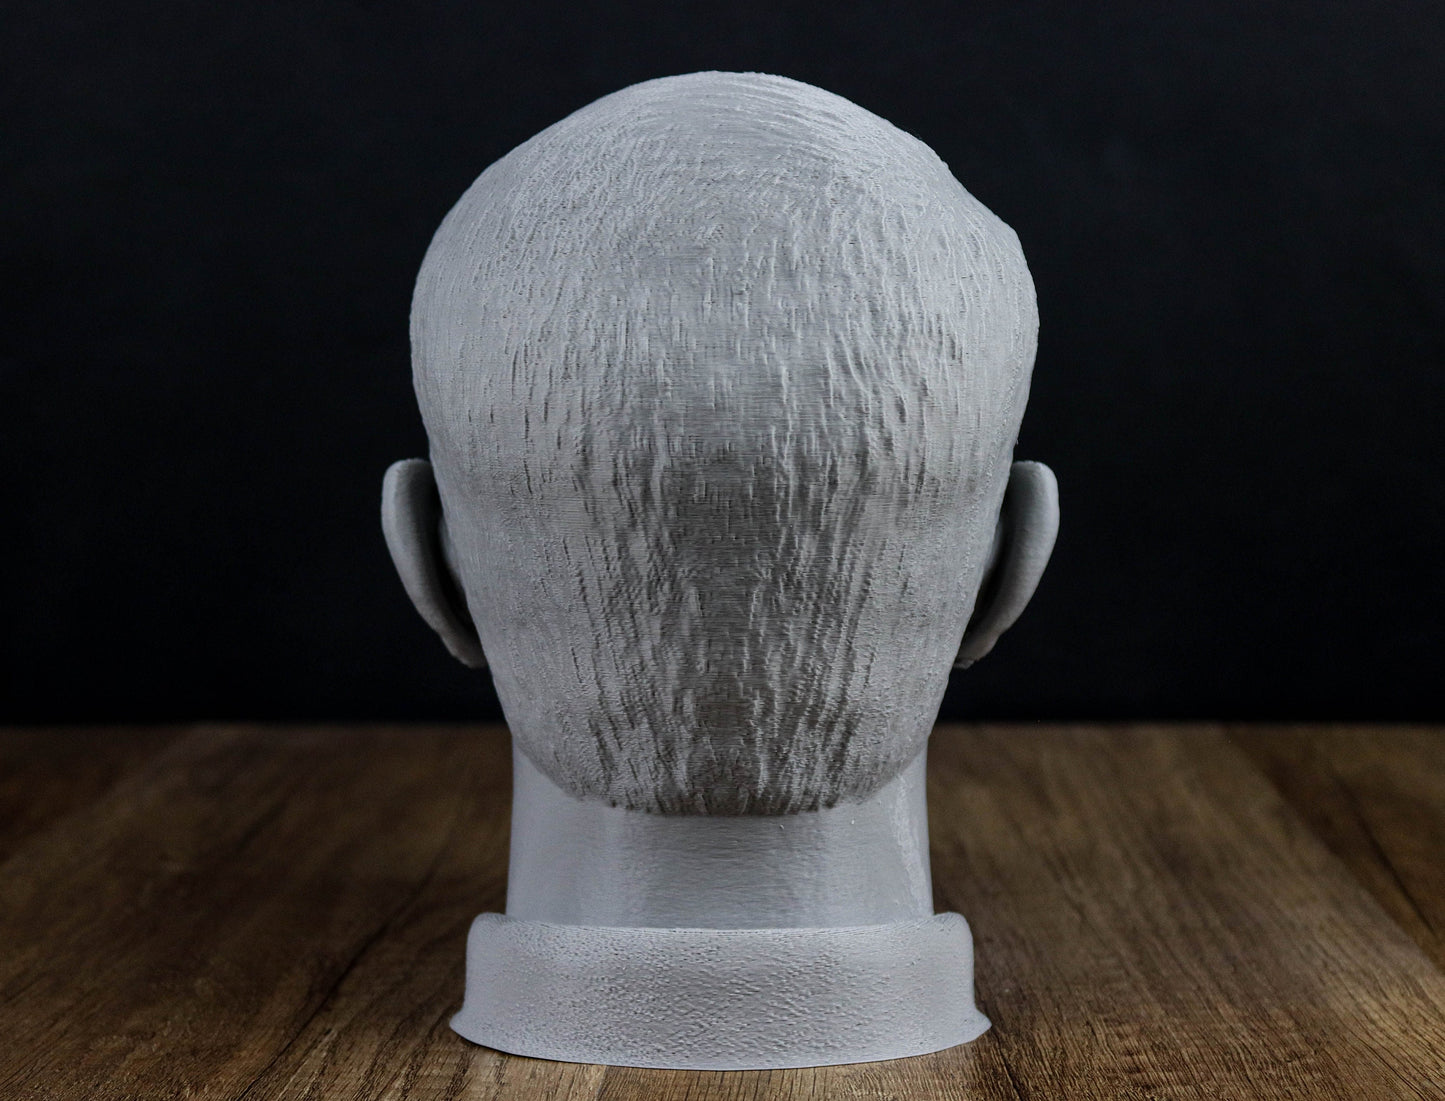 Steve McQueen Headphone Holder Bust, Headset Stand Figure, Room Decoration